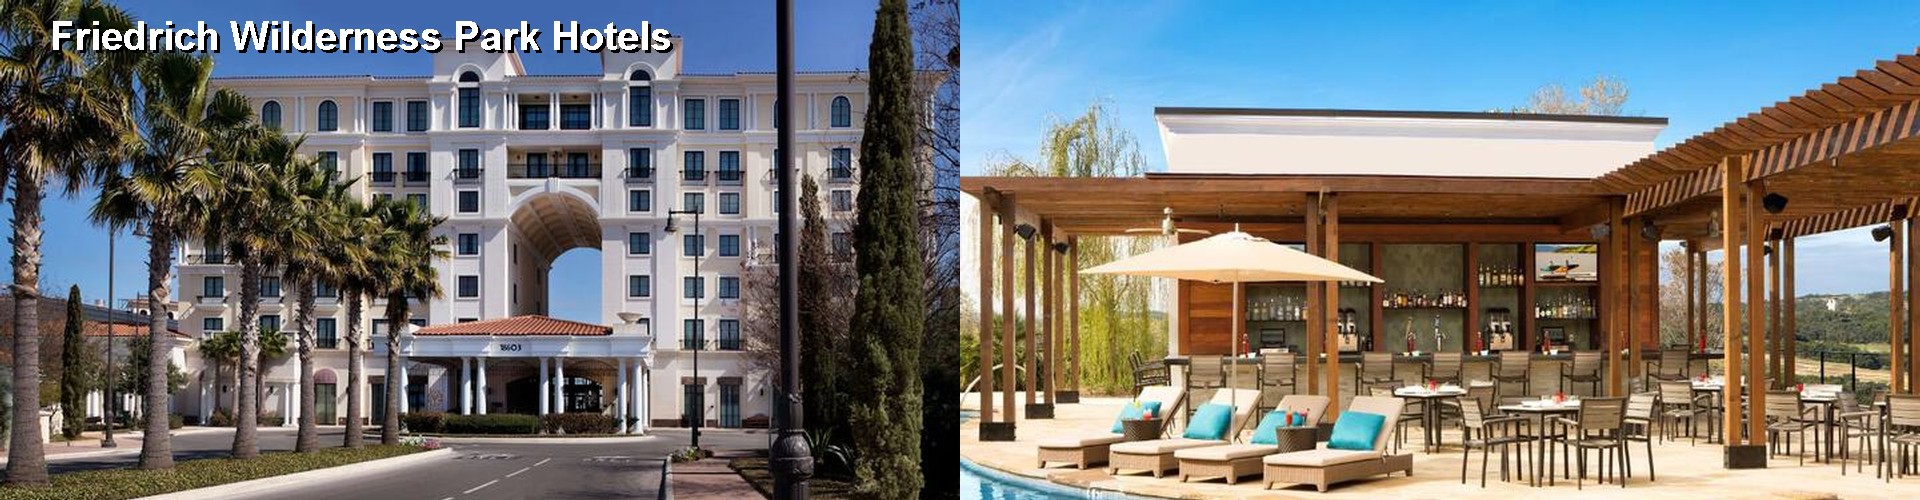 5 Best Hotels near Friedrich Wilderness Park